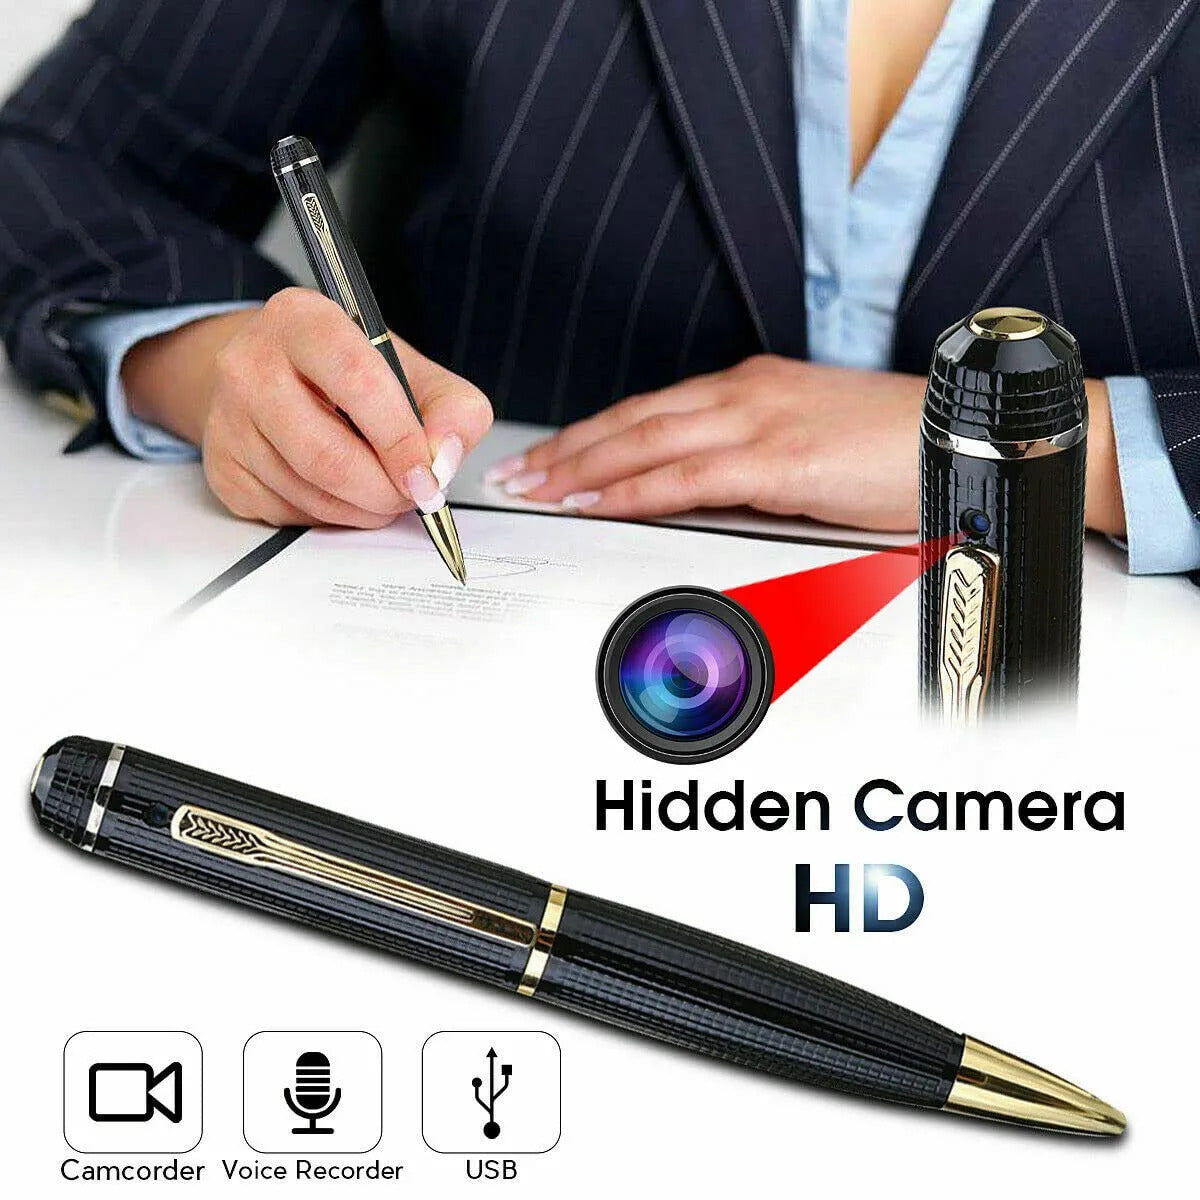 Spy Pen Hidden Camera Video and Audio Recording